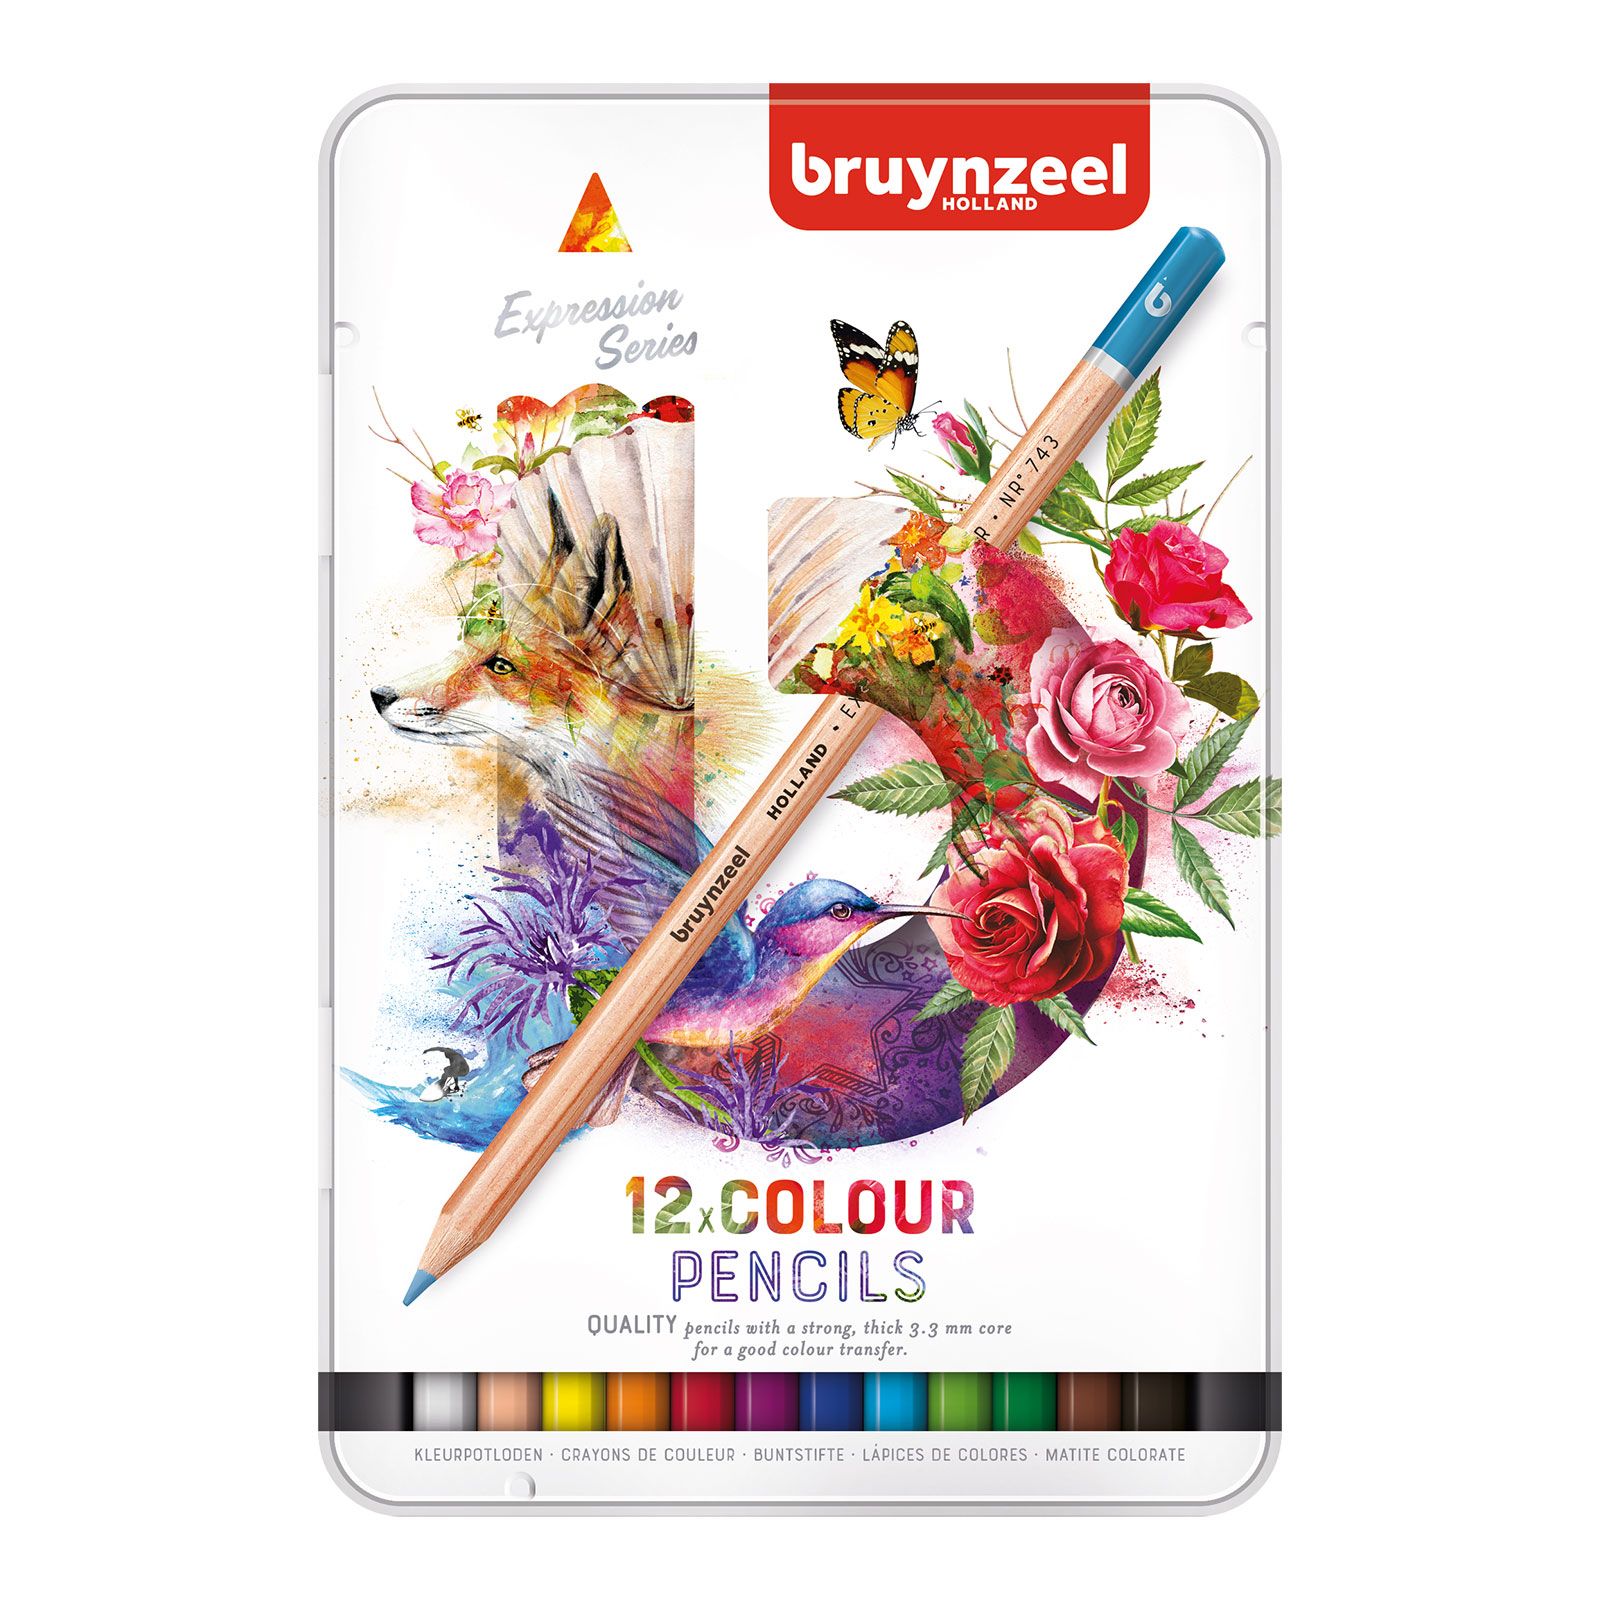 Bruynzeel • Expression colour pencils